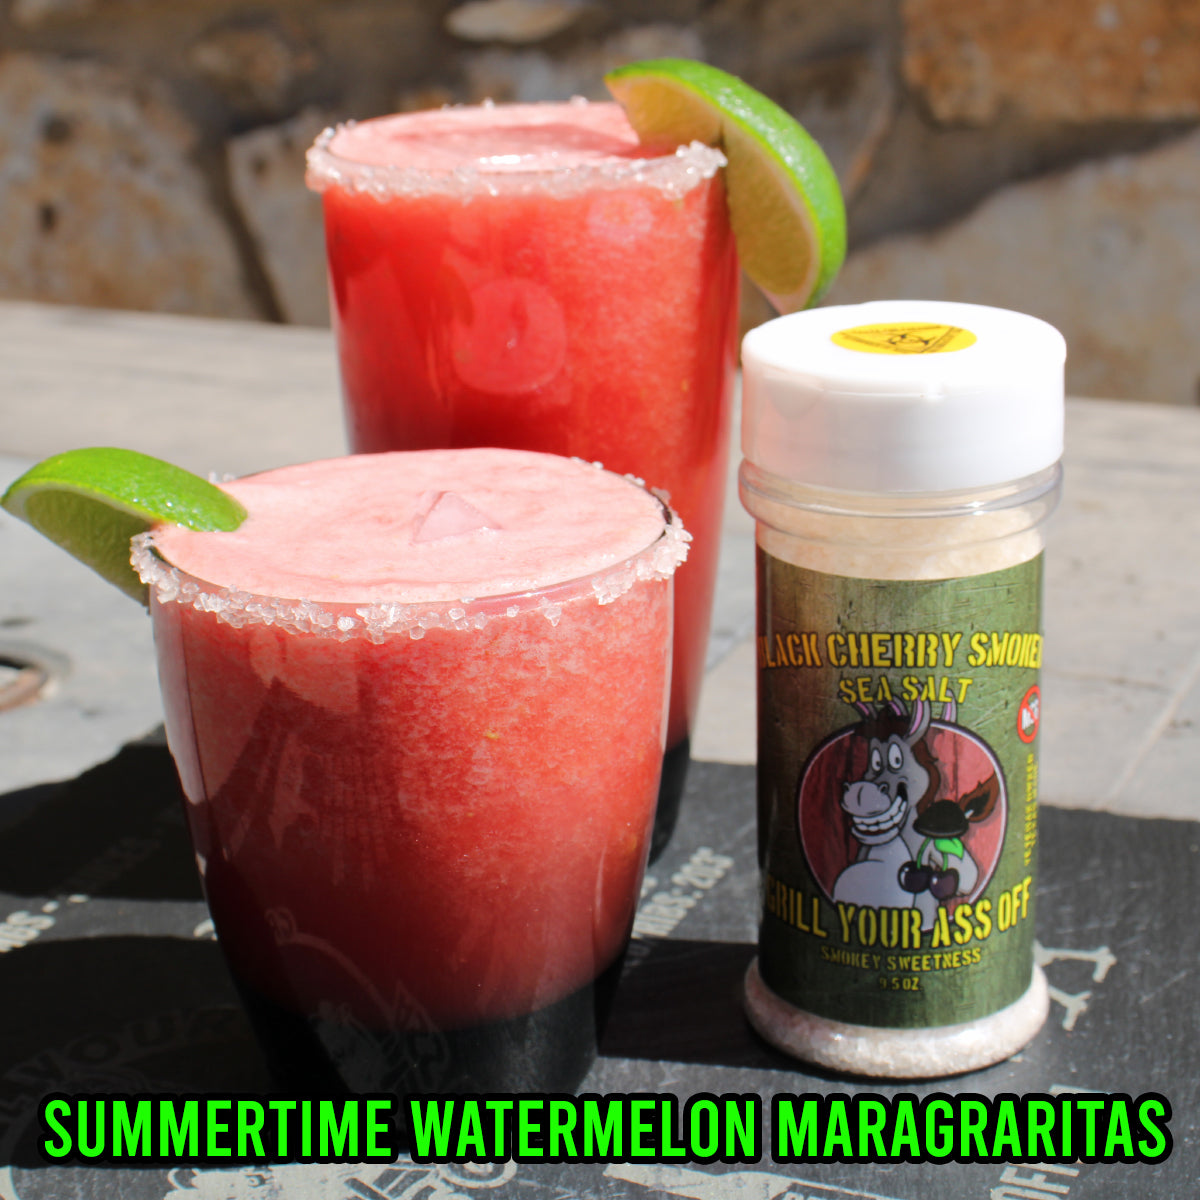 Watermelon Margaritas topped with Black Cherry Smoked Sea Salt